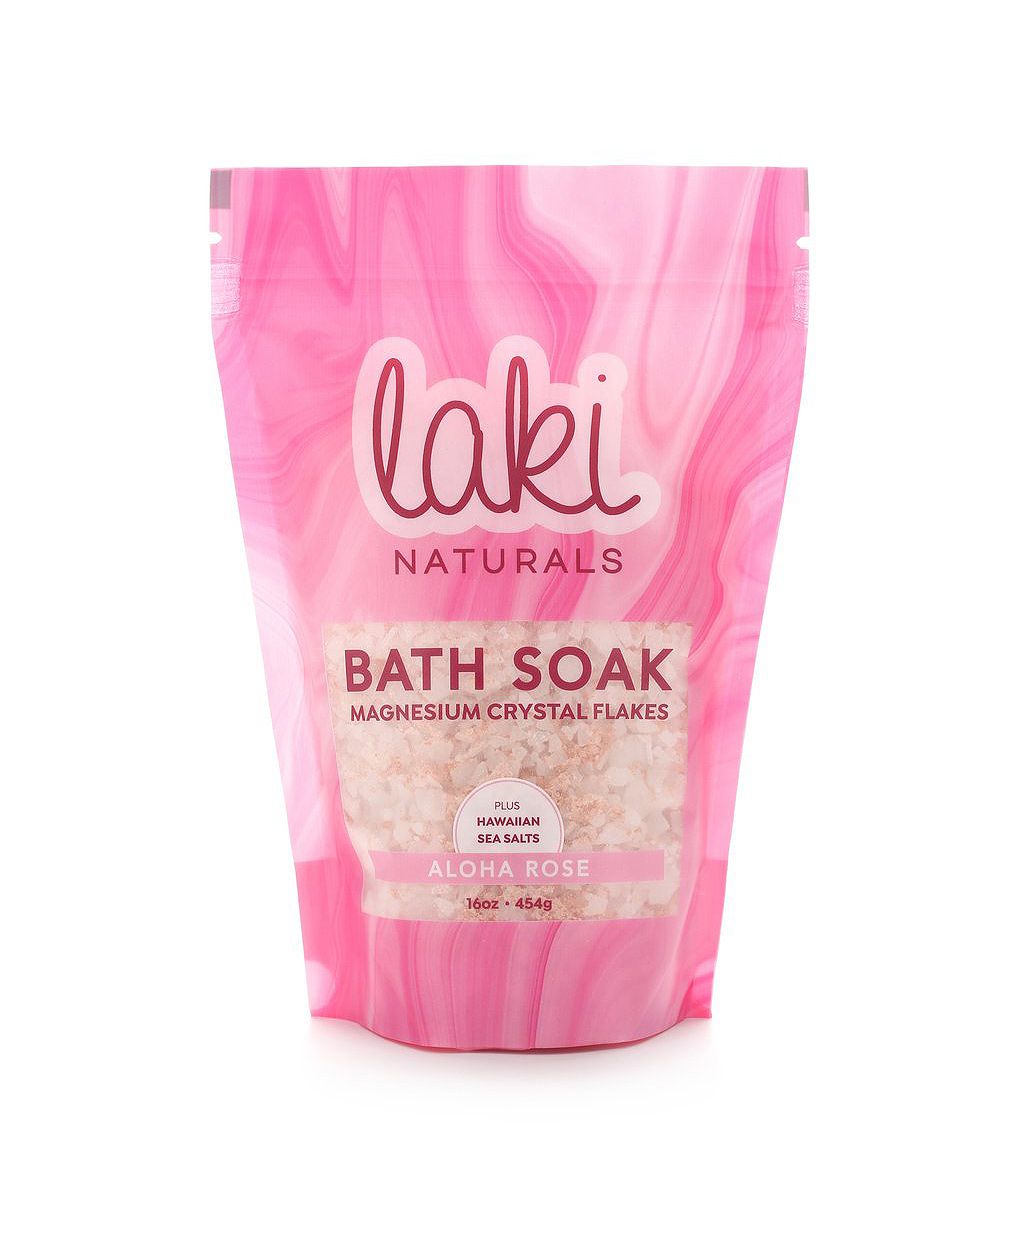 Laki Naturals Aloha Rose Bath Soak